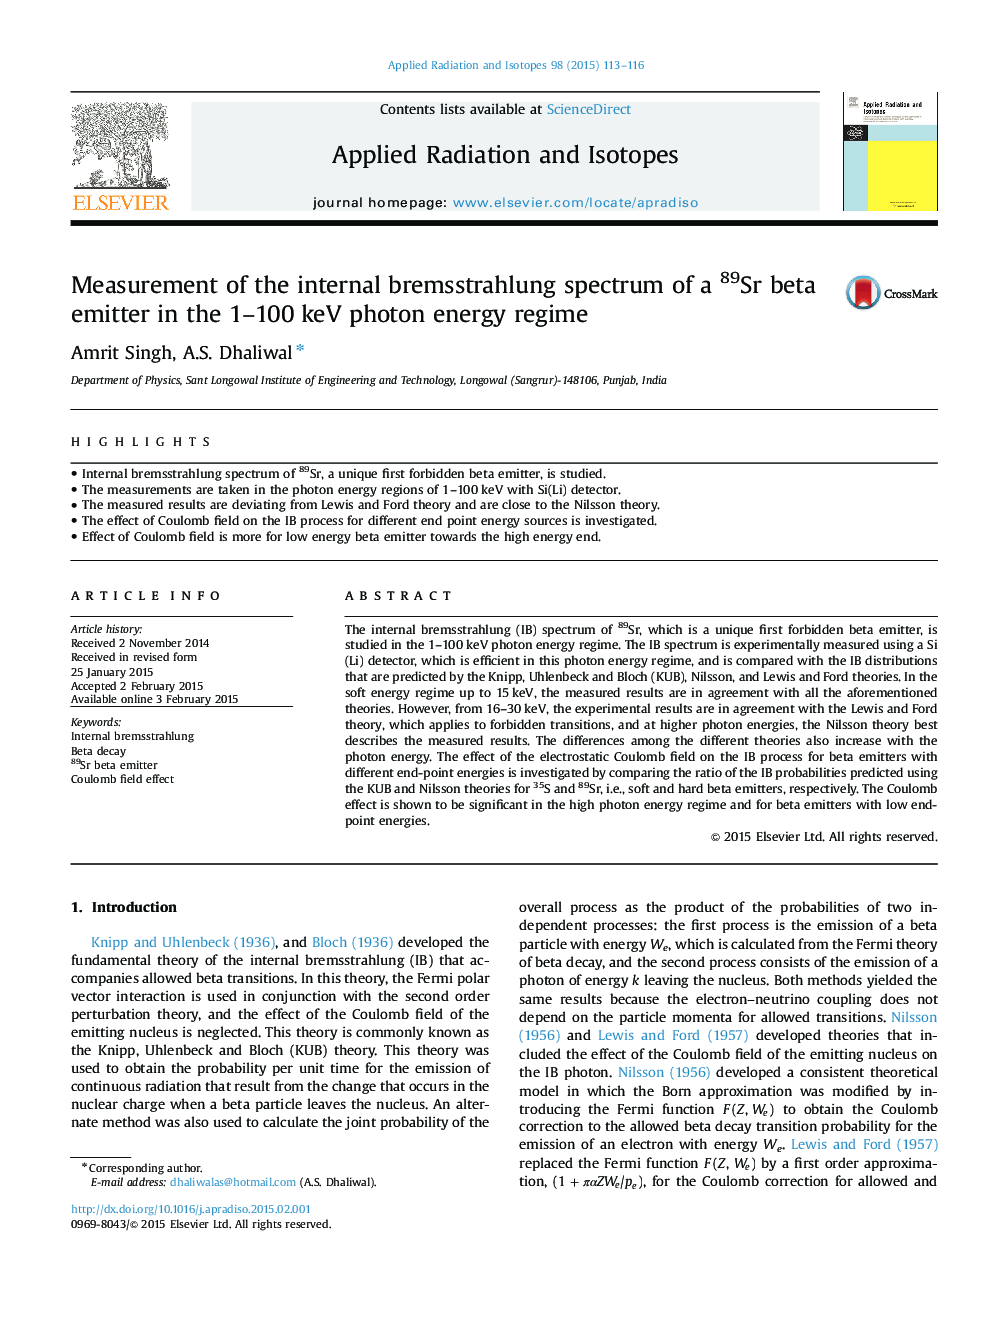 Measurement of the internal bremsstrahlung spectrum of a 89Sr beta emitter in the 1-100Â keV photon energy regime